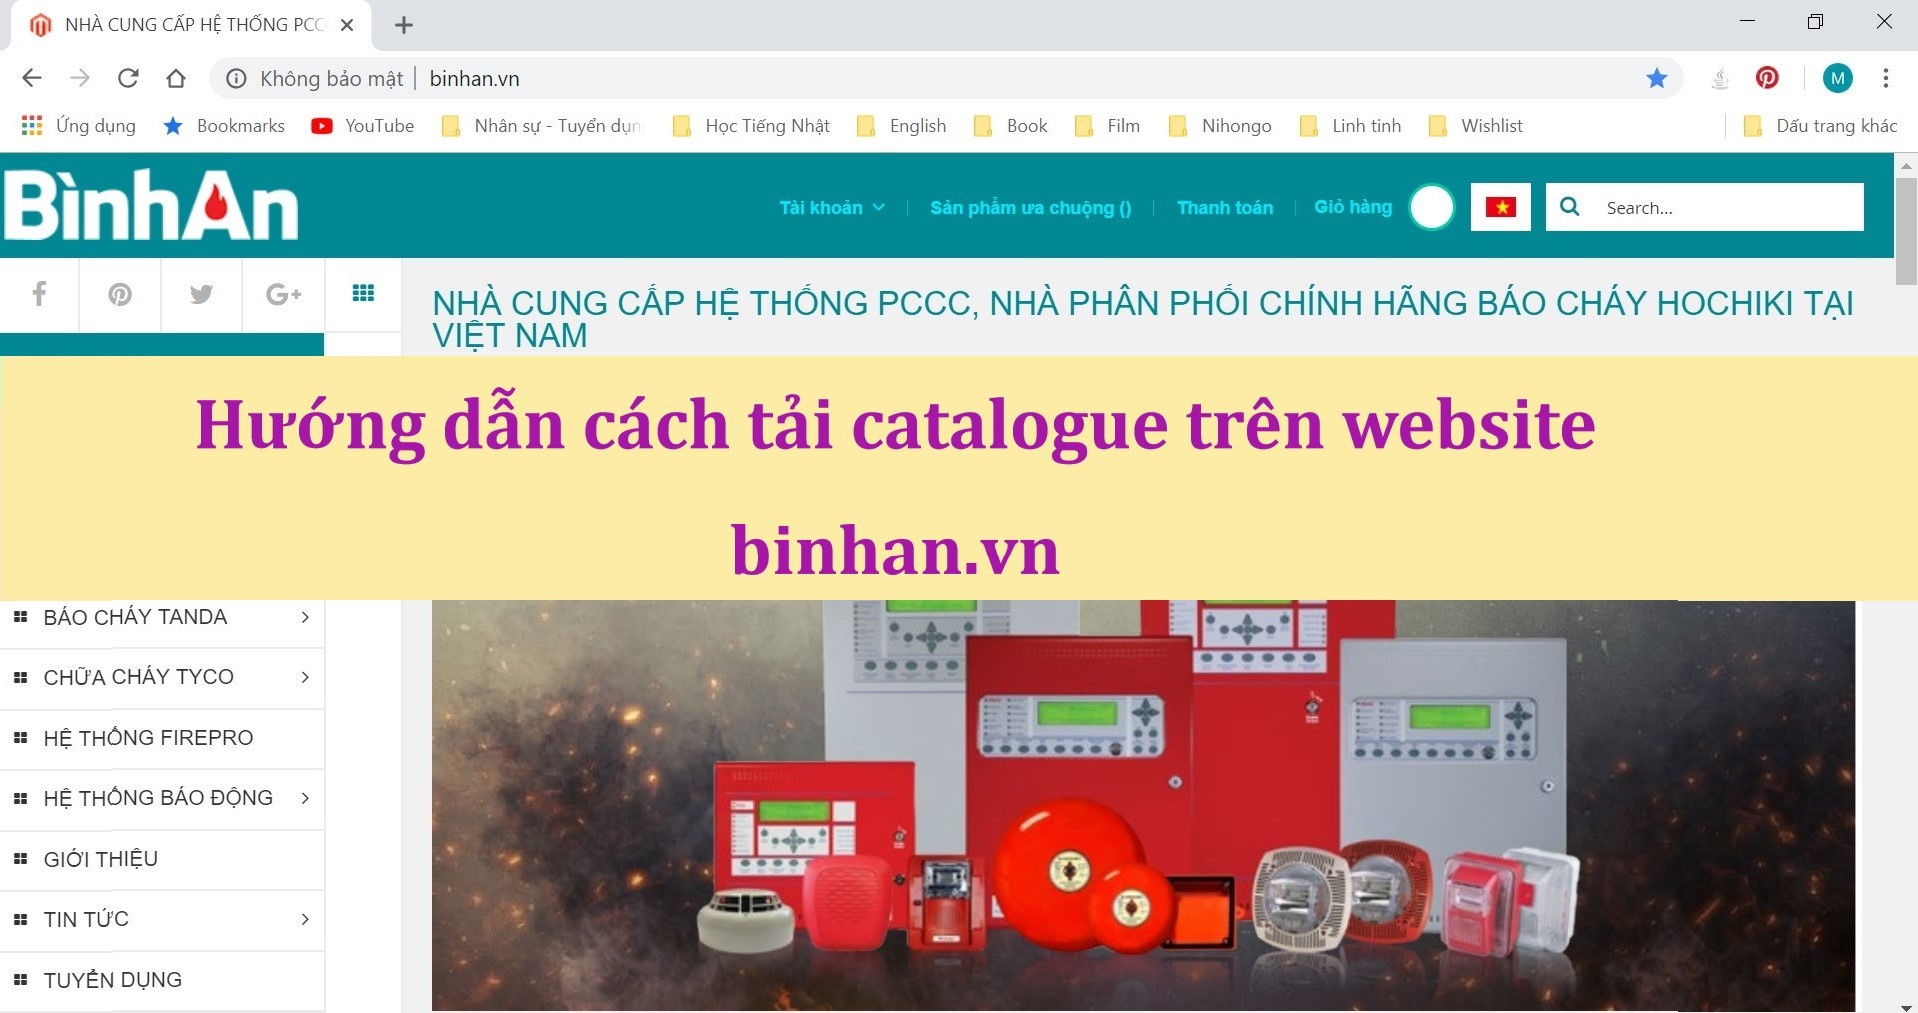 Hướng dẫn cách tải catalogue trên website binhan.vn